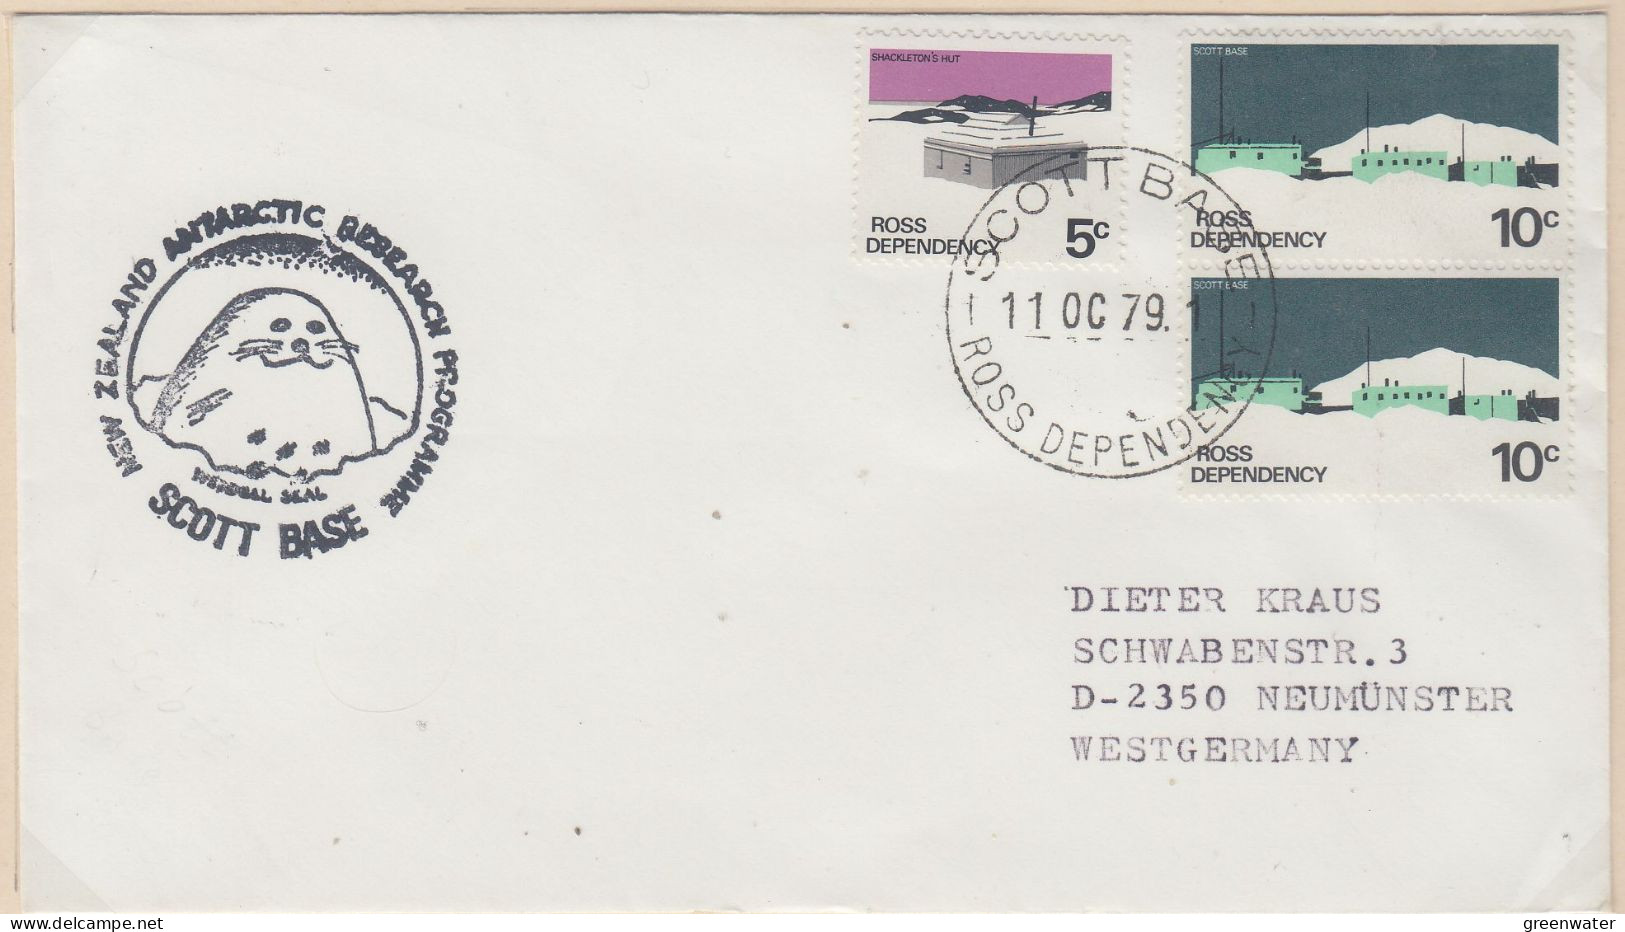 Ross Dependency Cover Ca Scott Base NZ Antarctic Research Programme Ca Scott Base 11 OC 1979 (XX166) - Briefe U. Dokumente